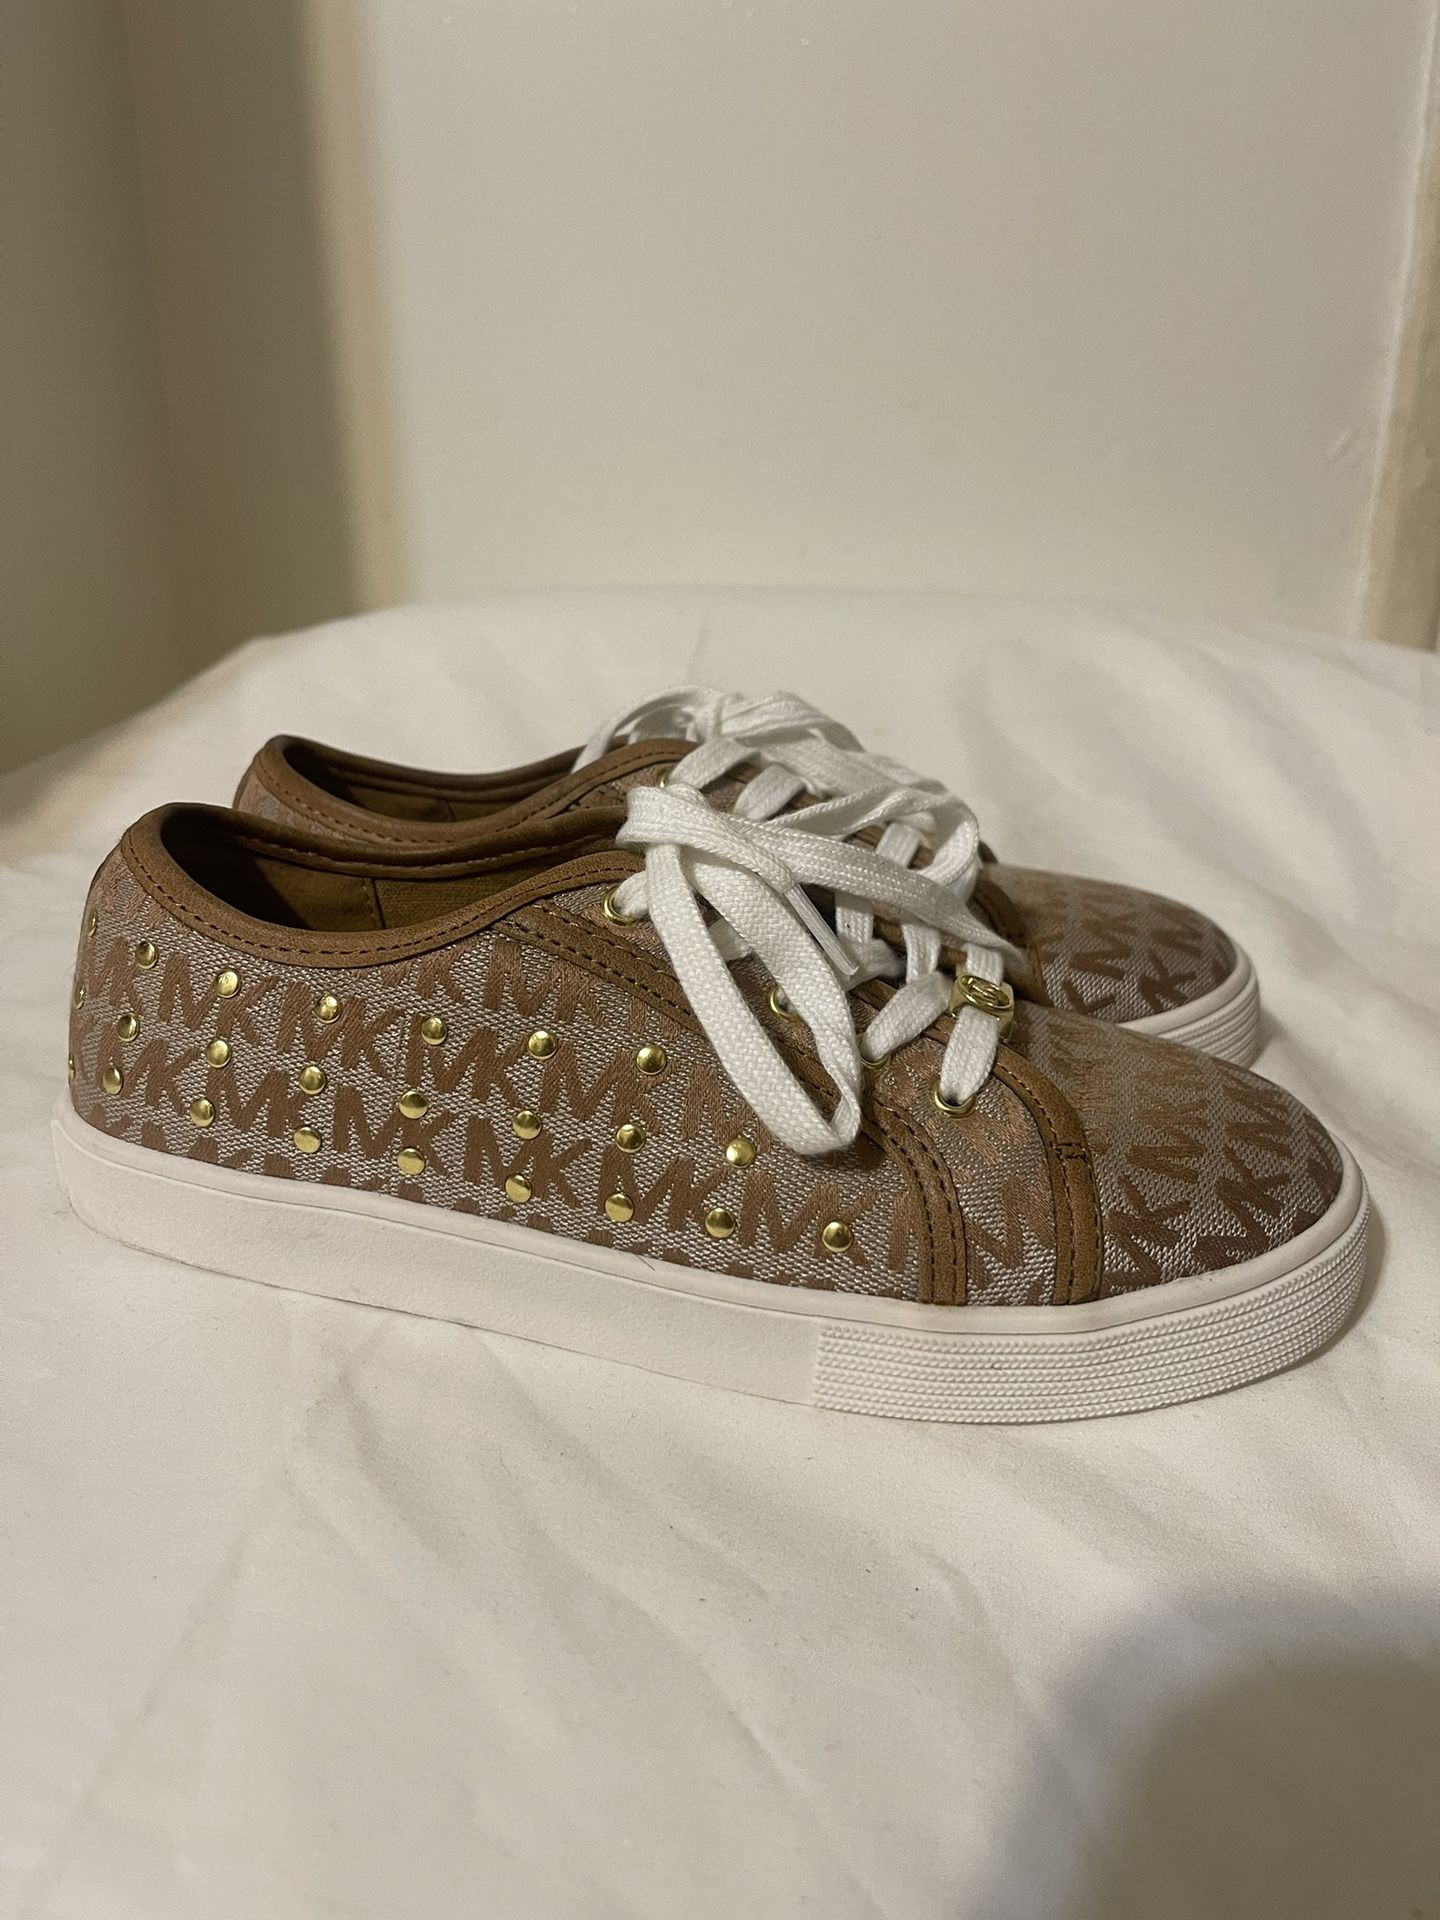 Michael Kors Medici Lace MK Signature Sneakers women’s size 4 Tan/Gold